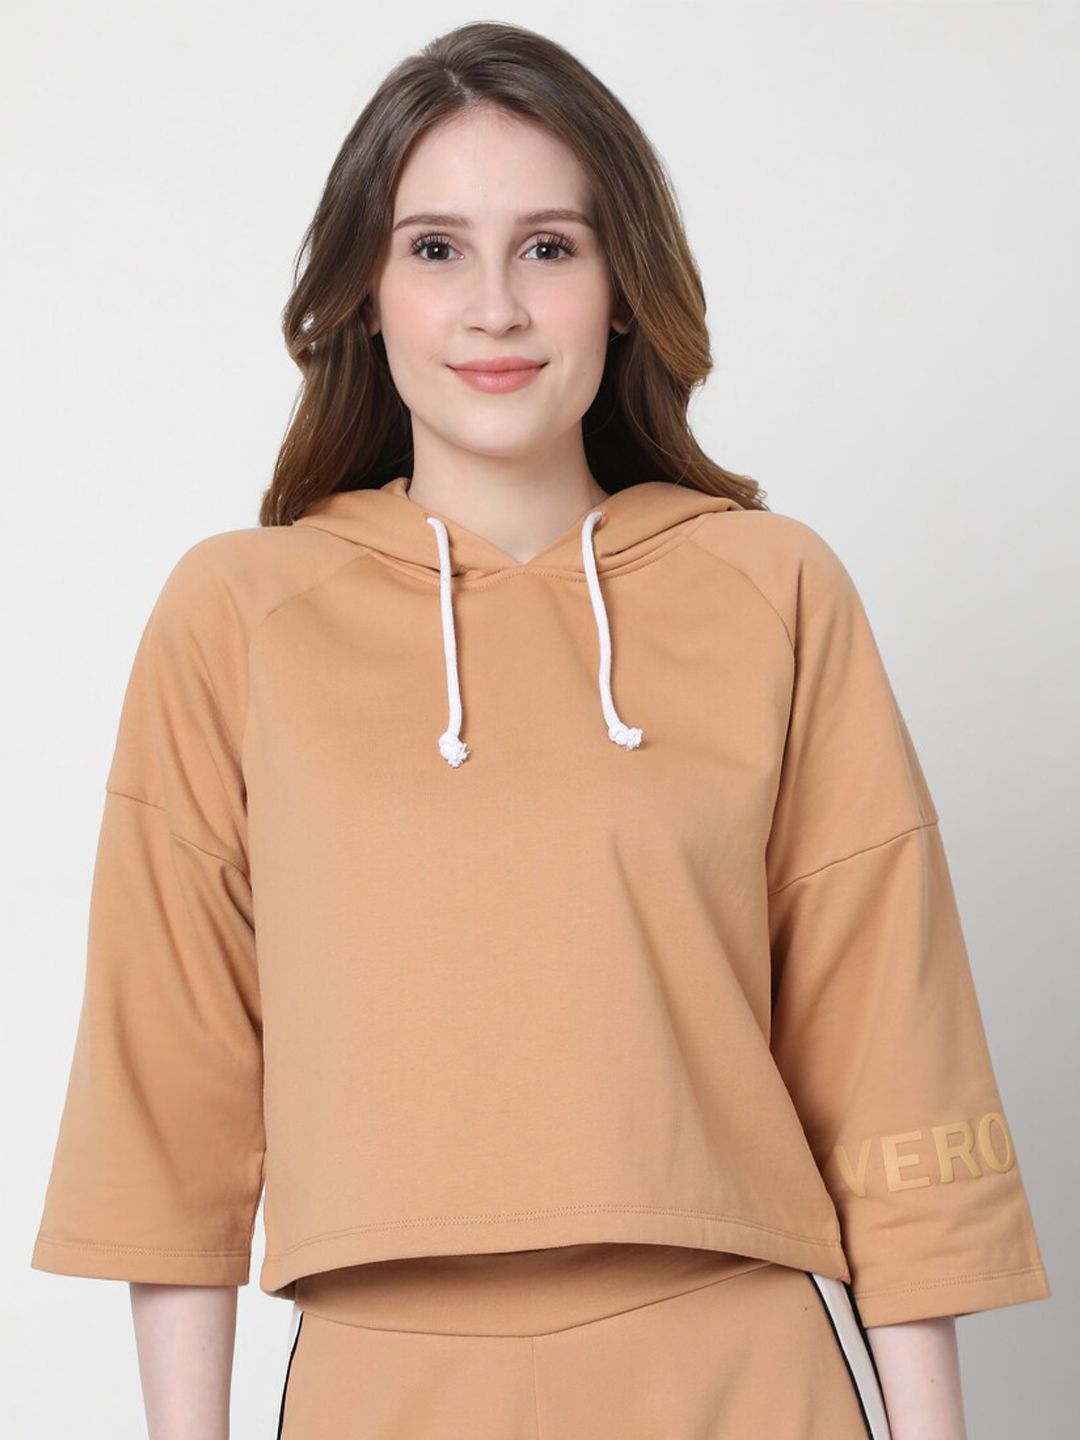 Vero Moda Women Brown Sweatshirt Price in India